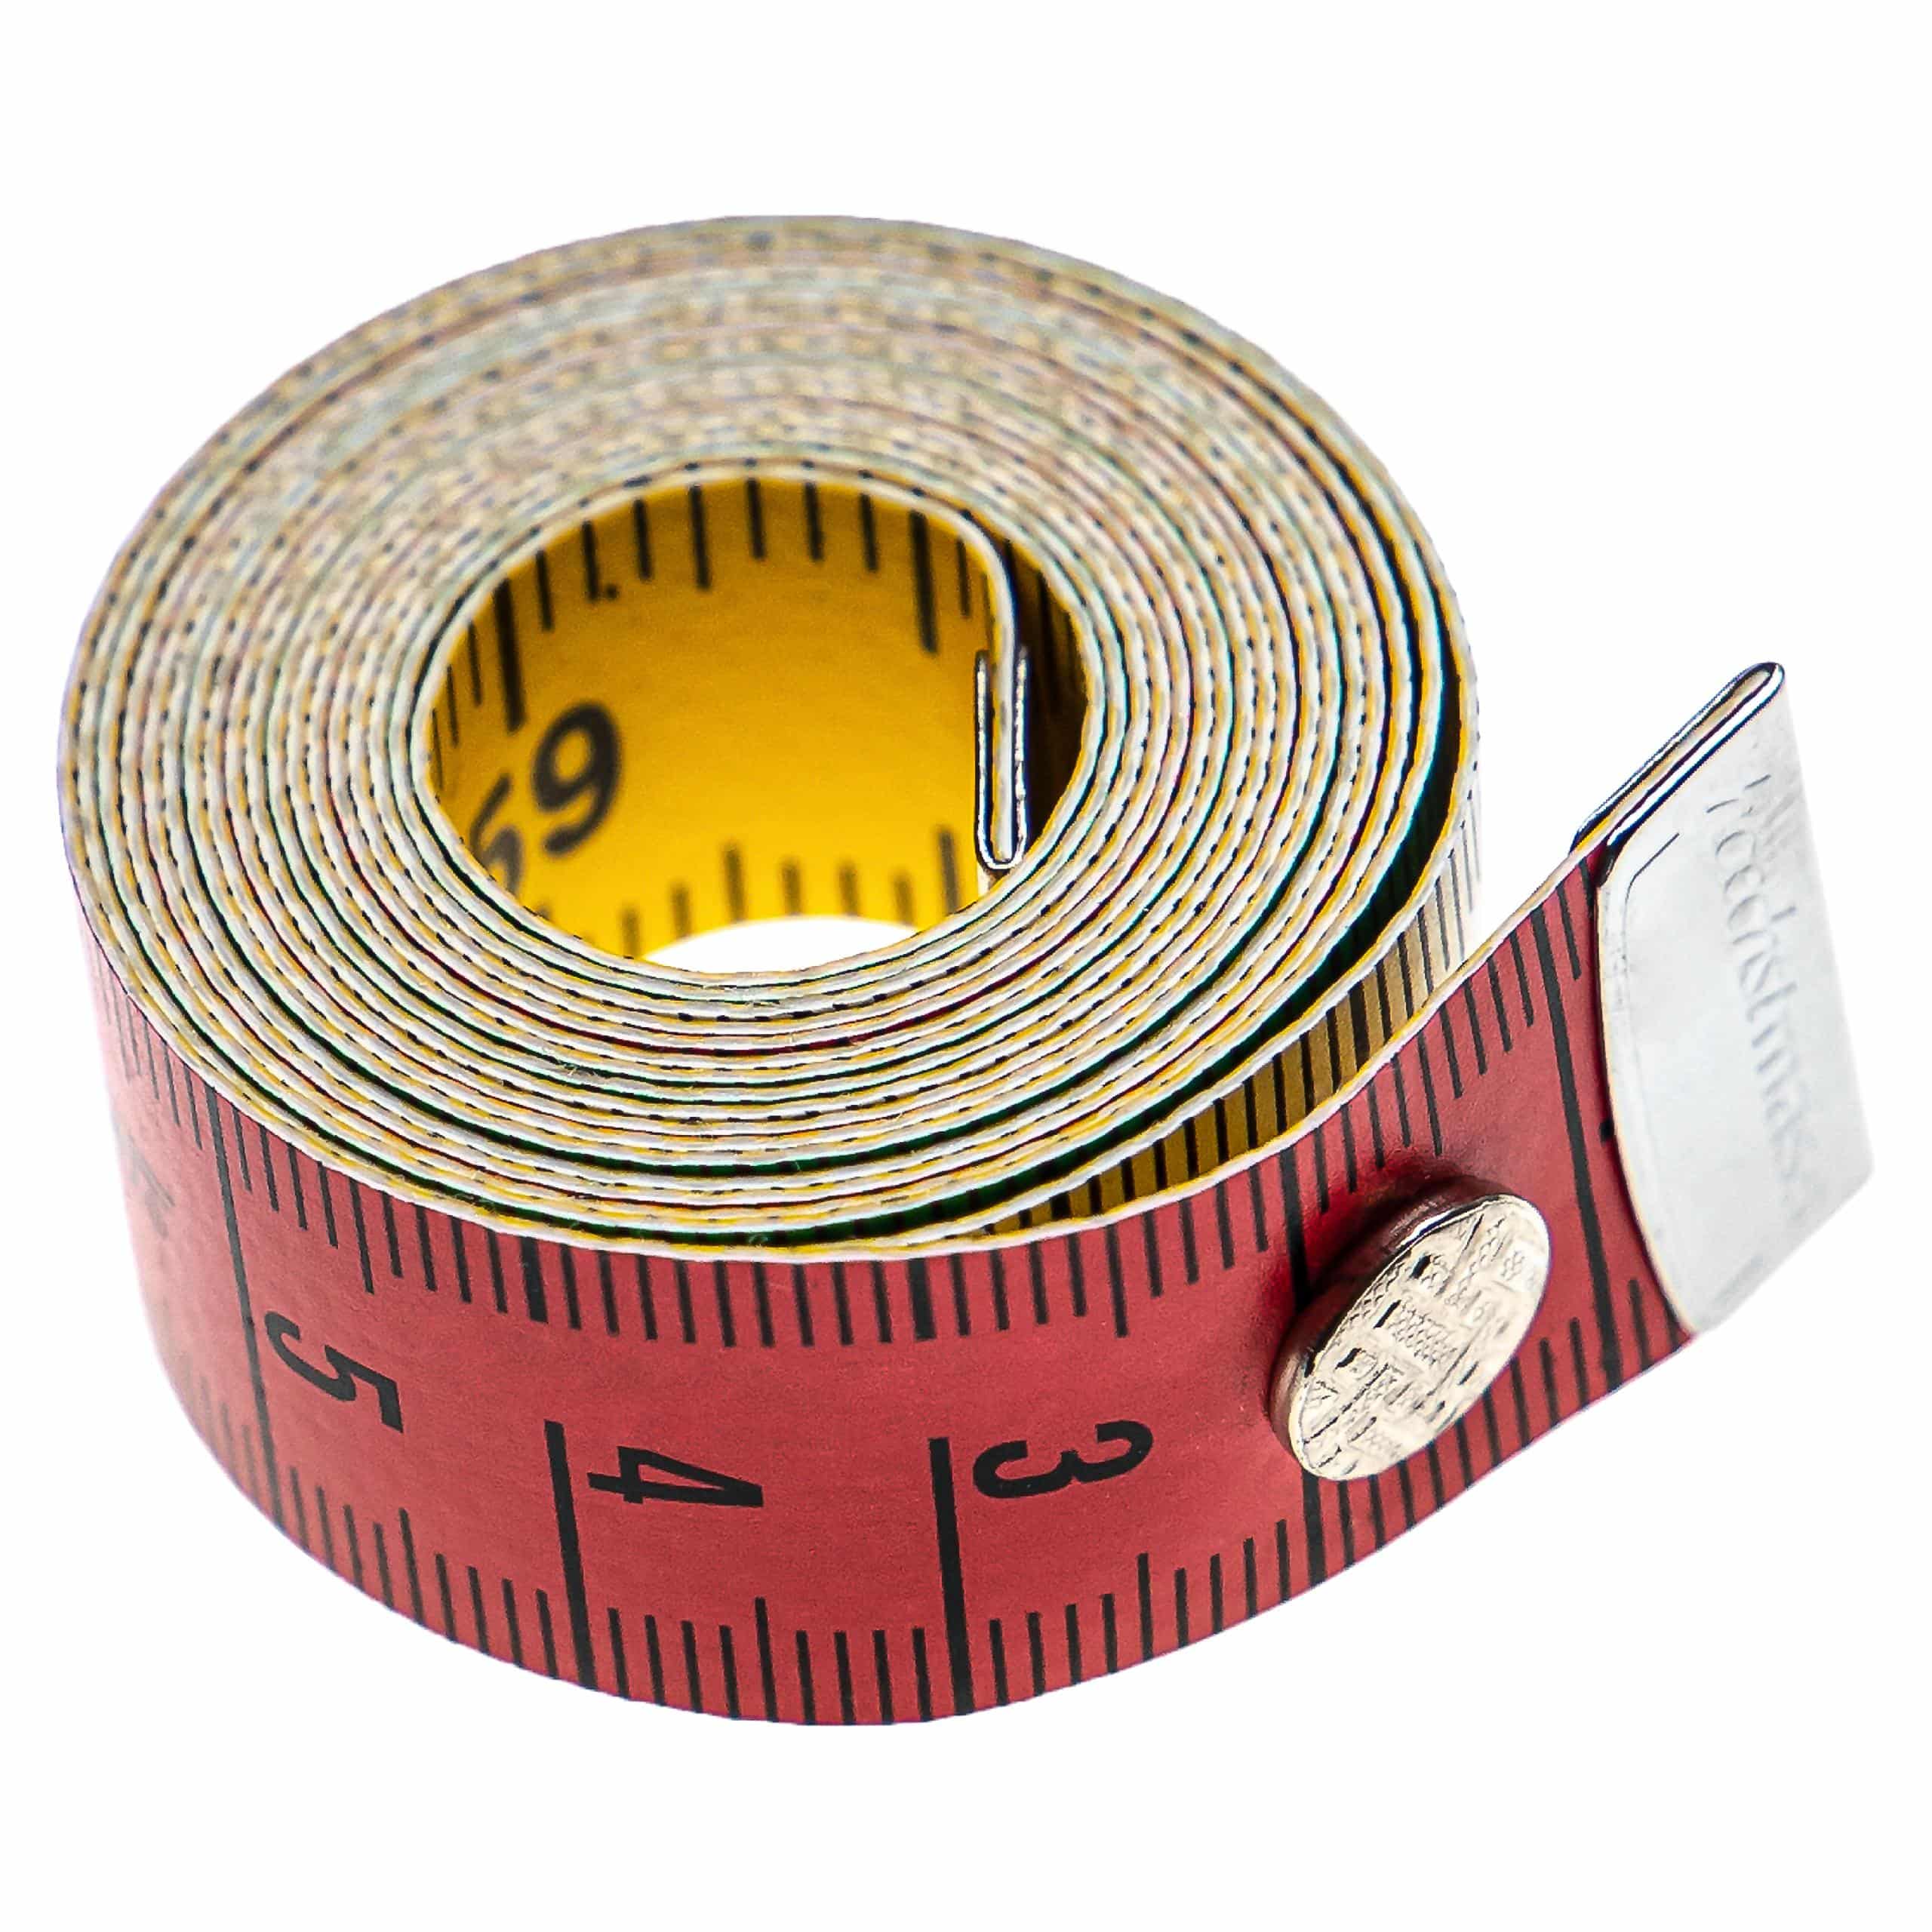 vhbw Tailor's Measuring Tape with Push Button - Metre Measure, 150 cm, 4 Colours, Cm + Inch Scale, Flexible